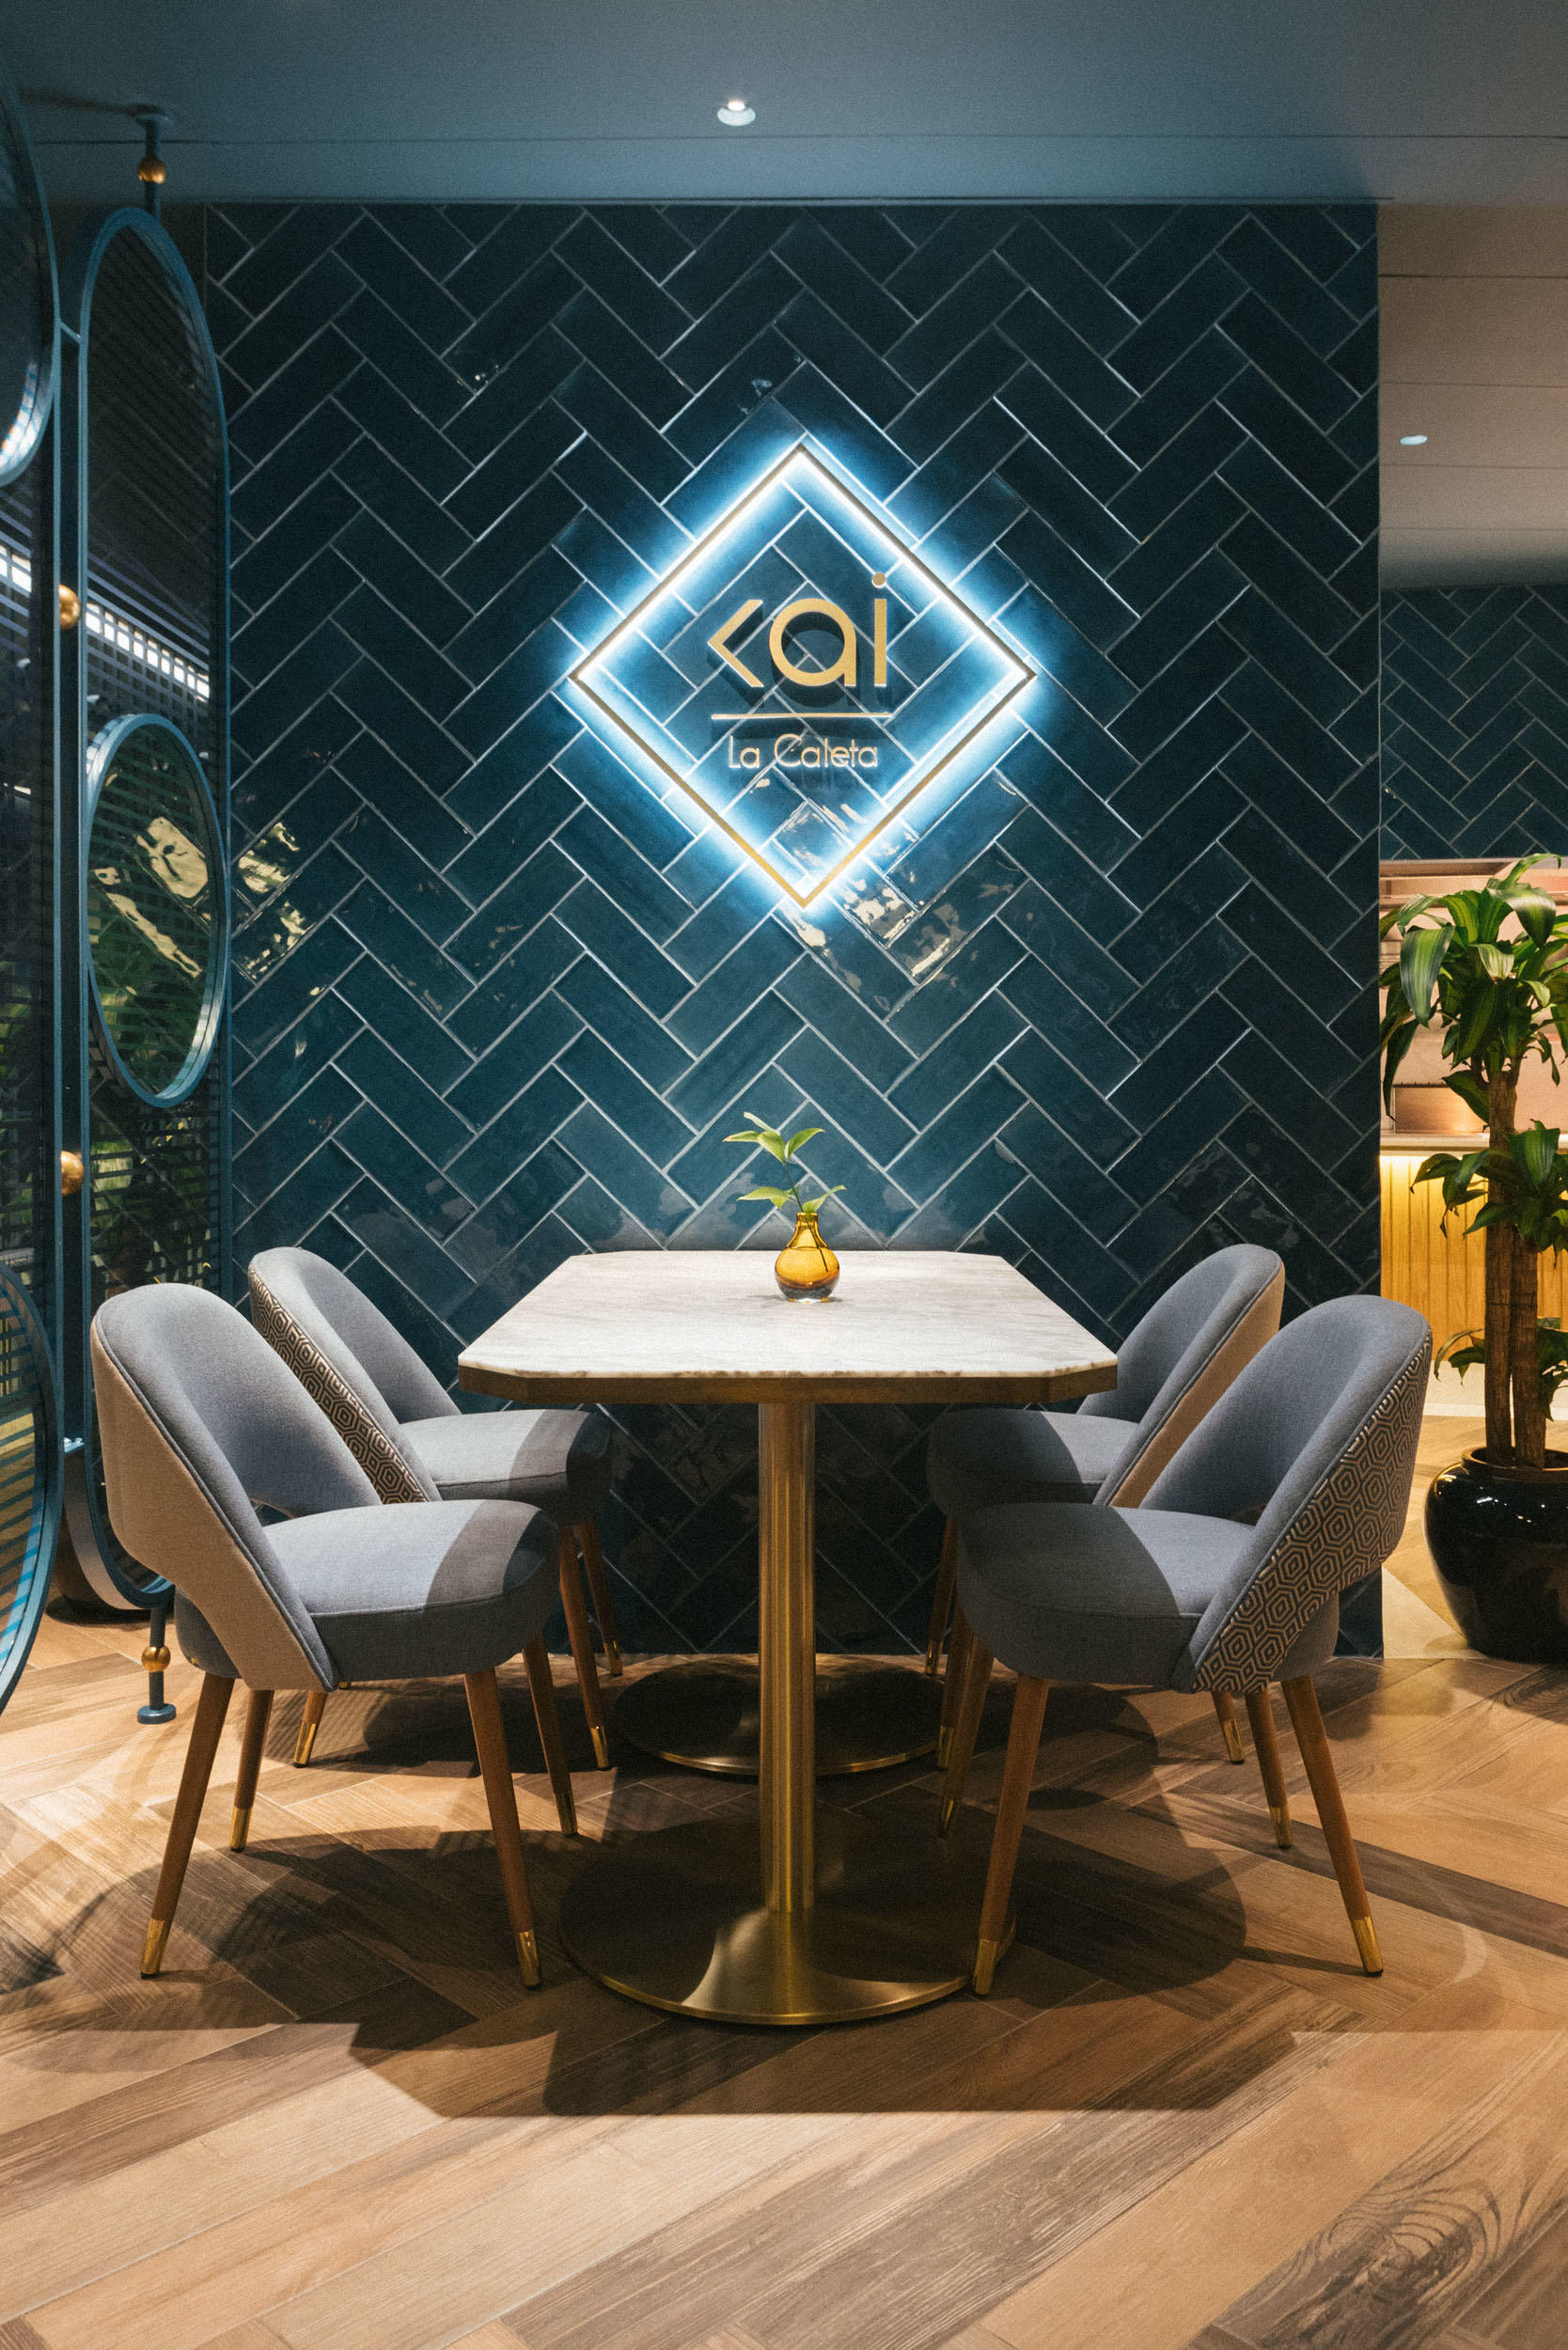 Kai La Caleta Restaurant By In Out Studio Restaurant Interiors